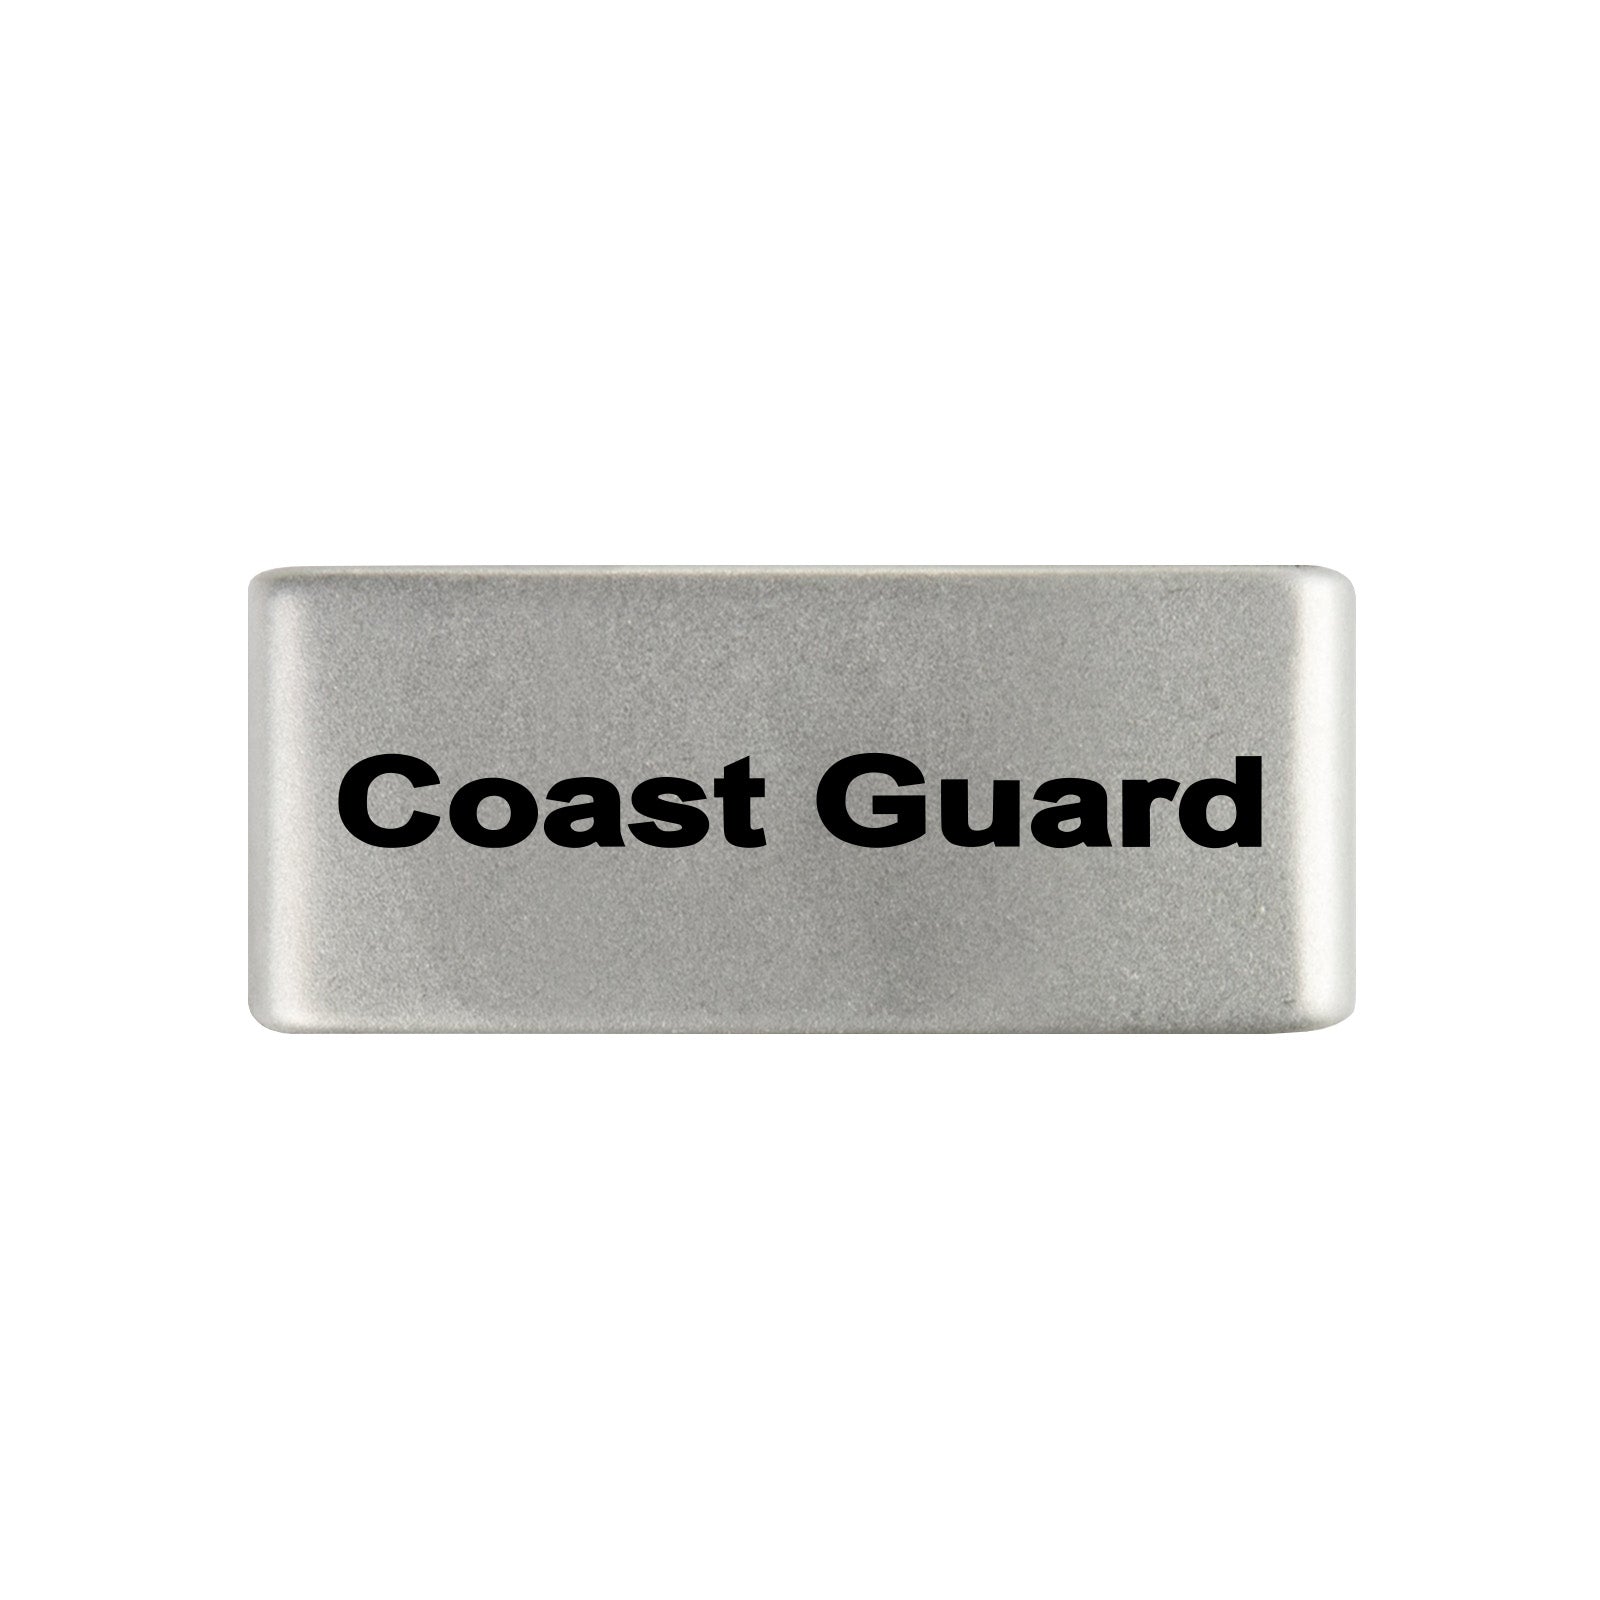 Coast Guard Clearance Badge Badge 13mm - ROAD iD